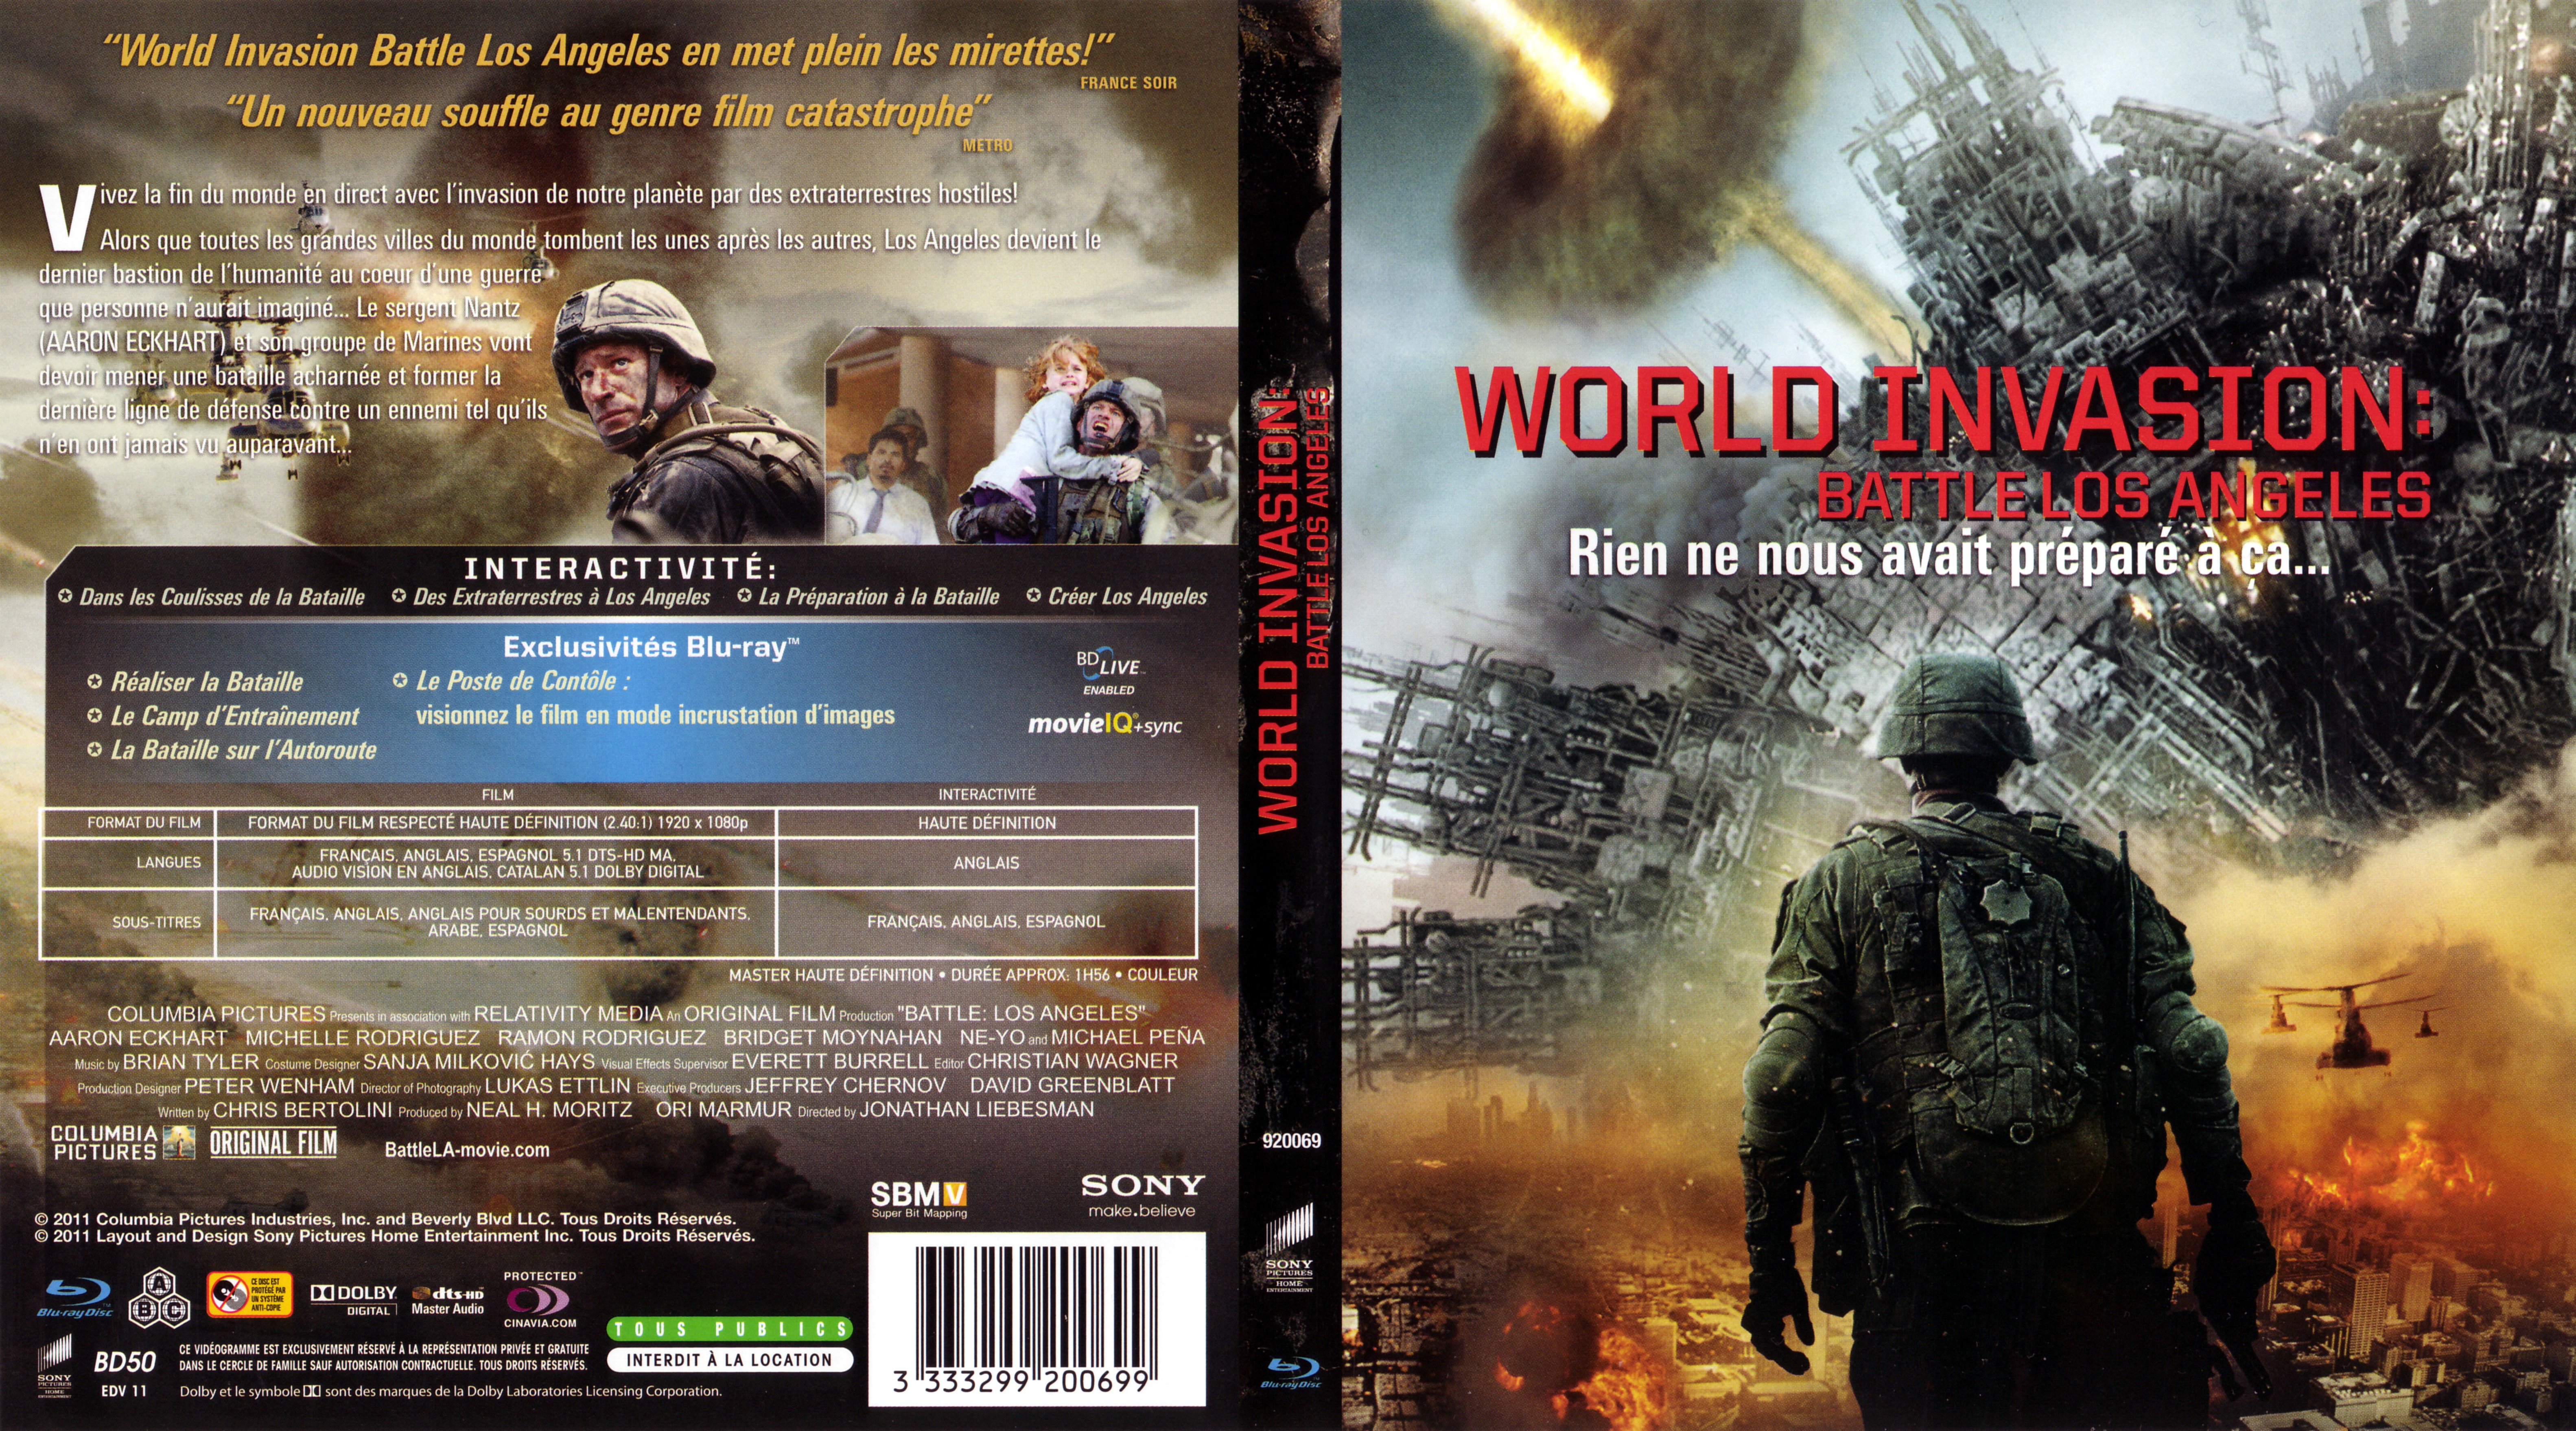 Jaquette DVD World Invasion Battle Los Angeles (BLU-RAY) v2